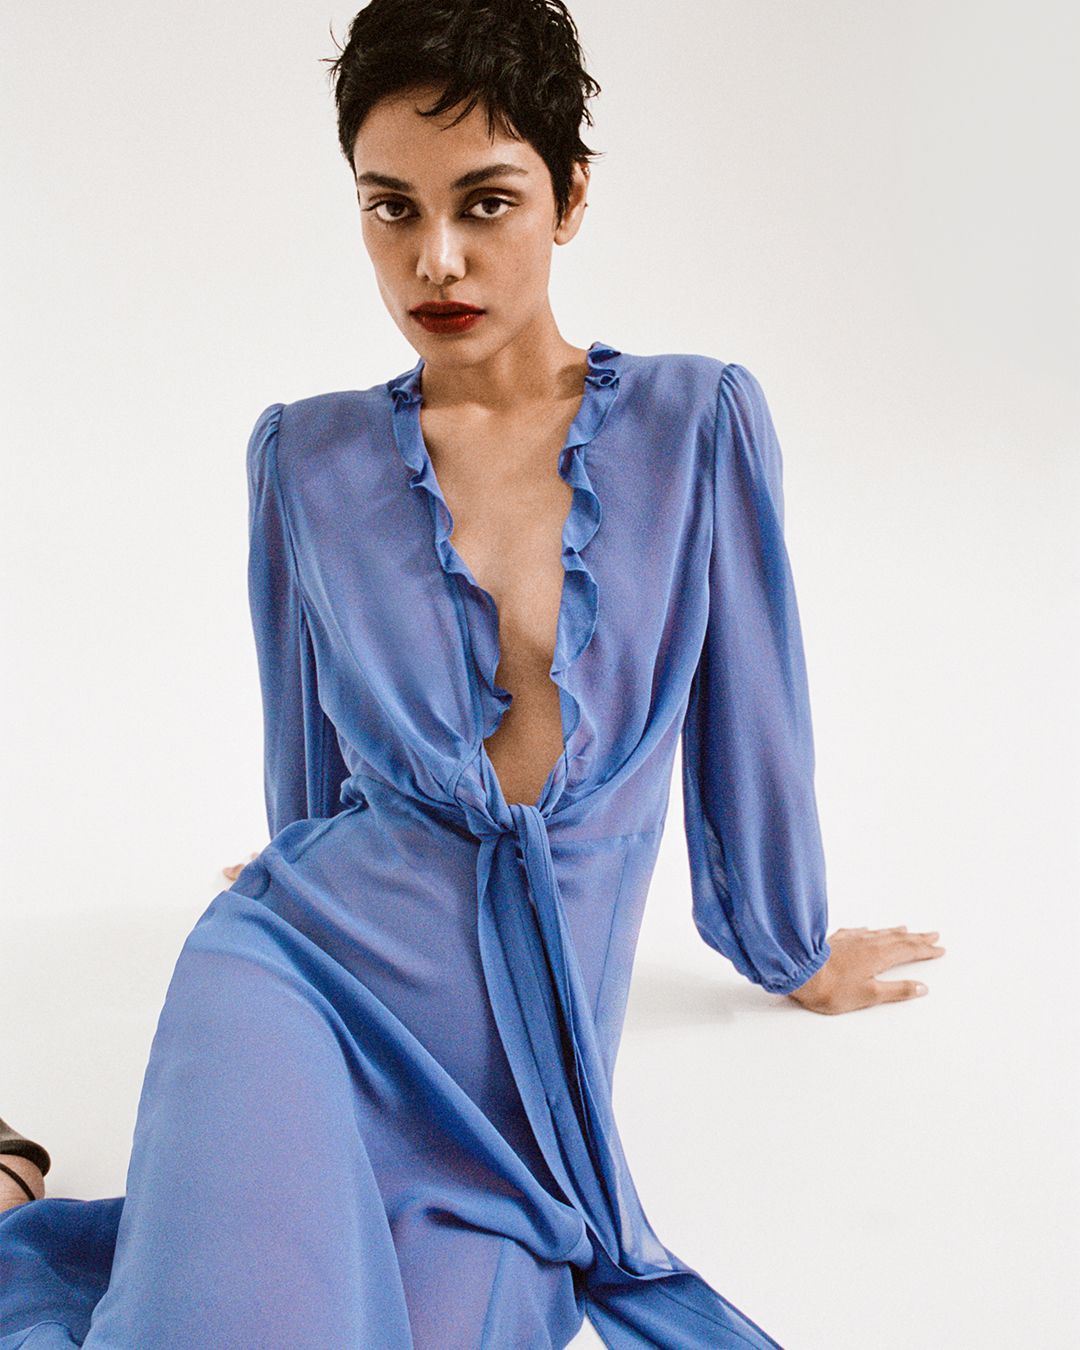 Zinnia Kumar sitting on the floor in a blue silk dress with ruffled collar